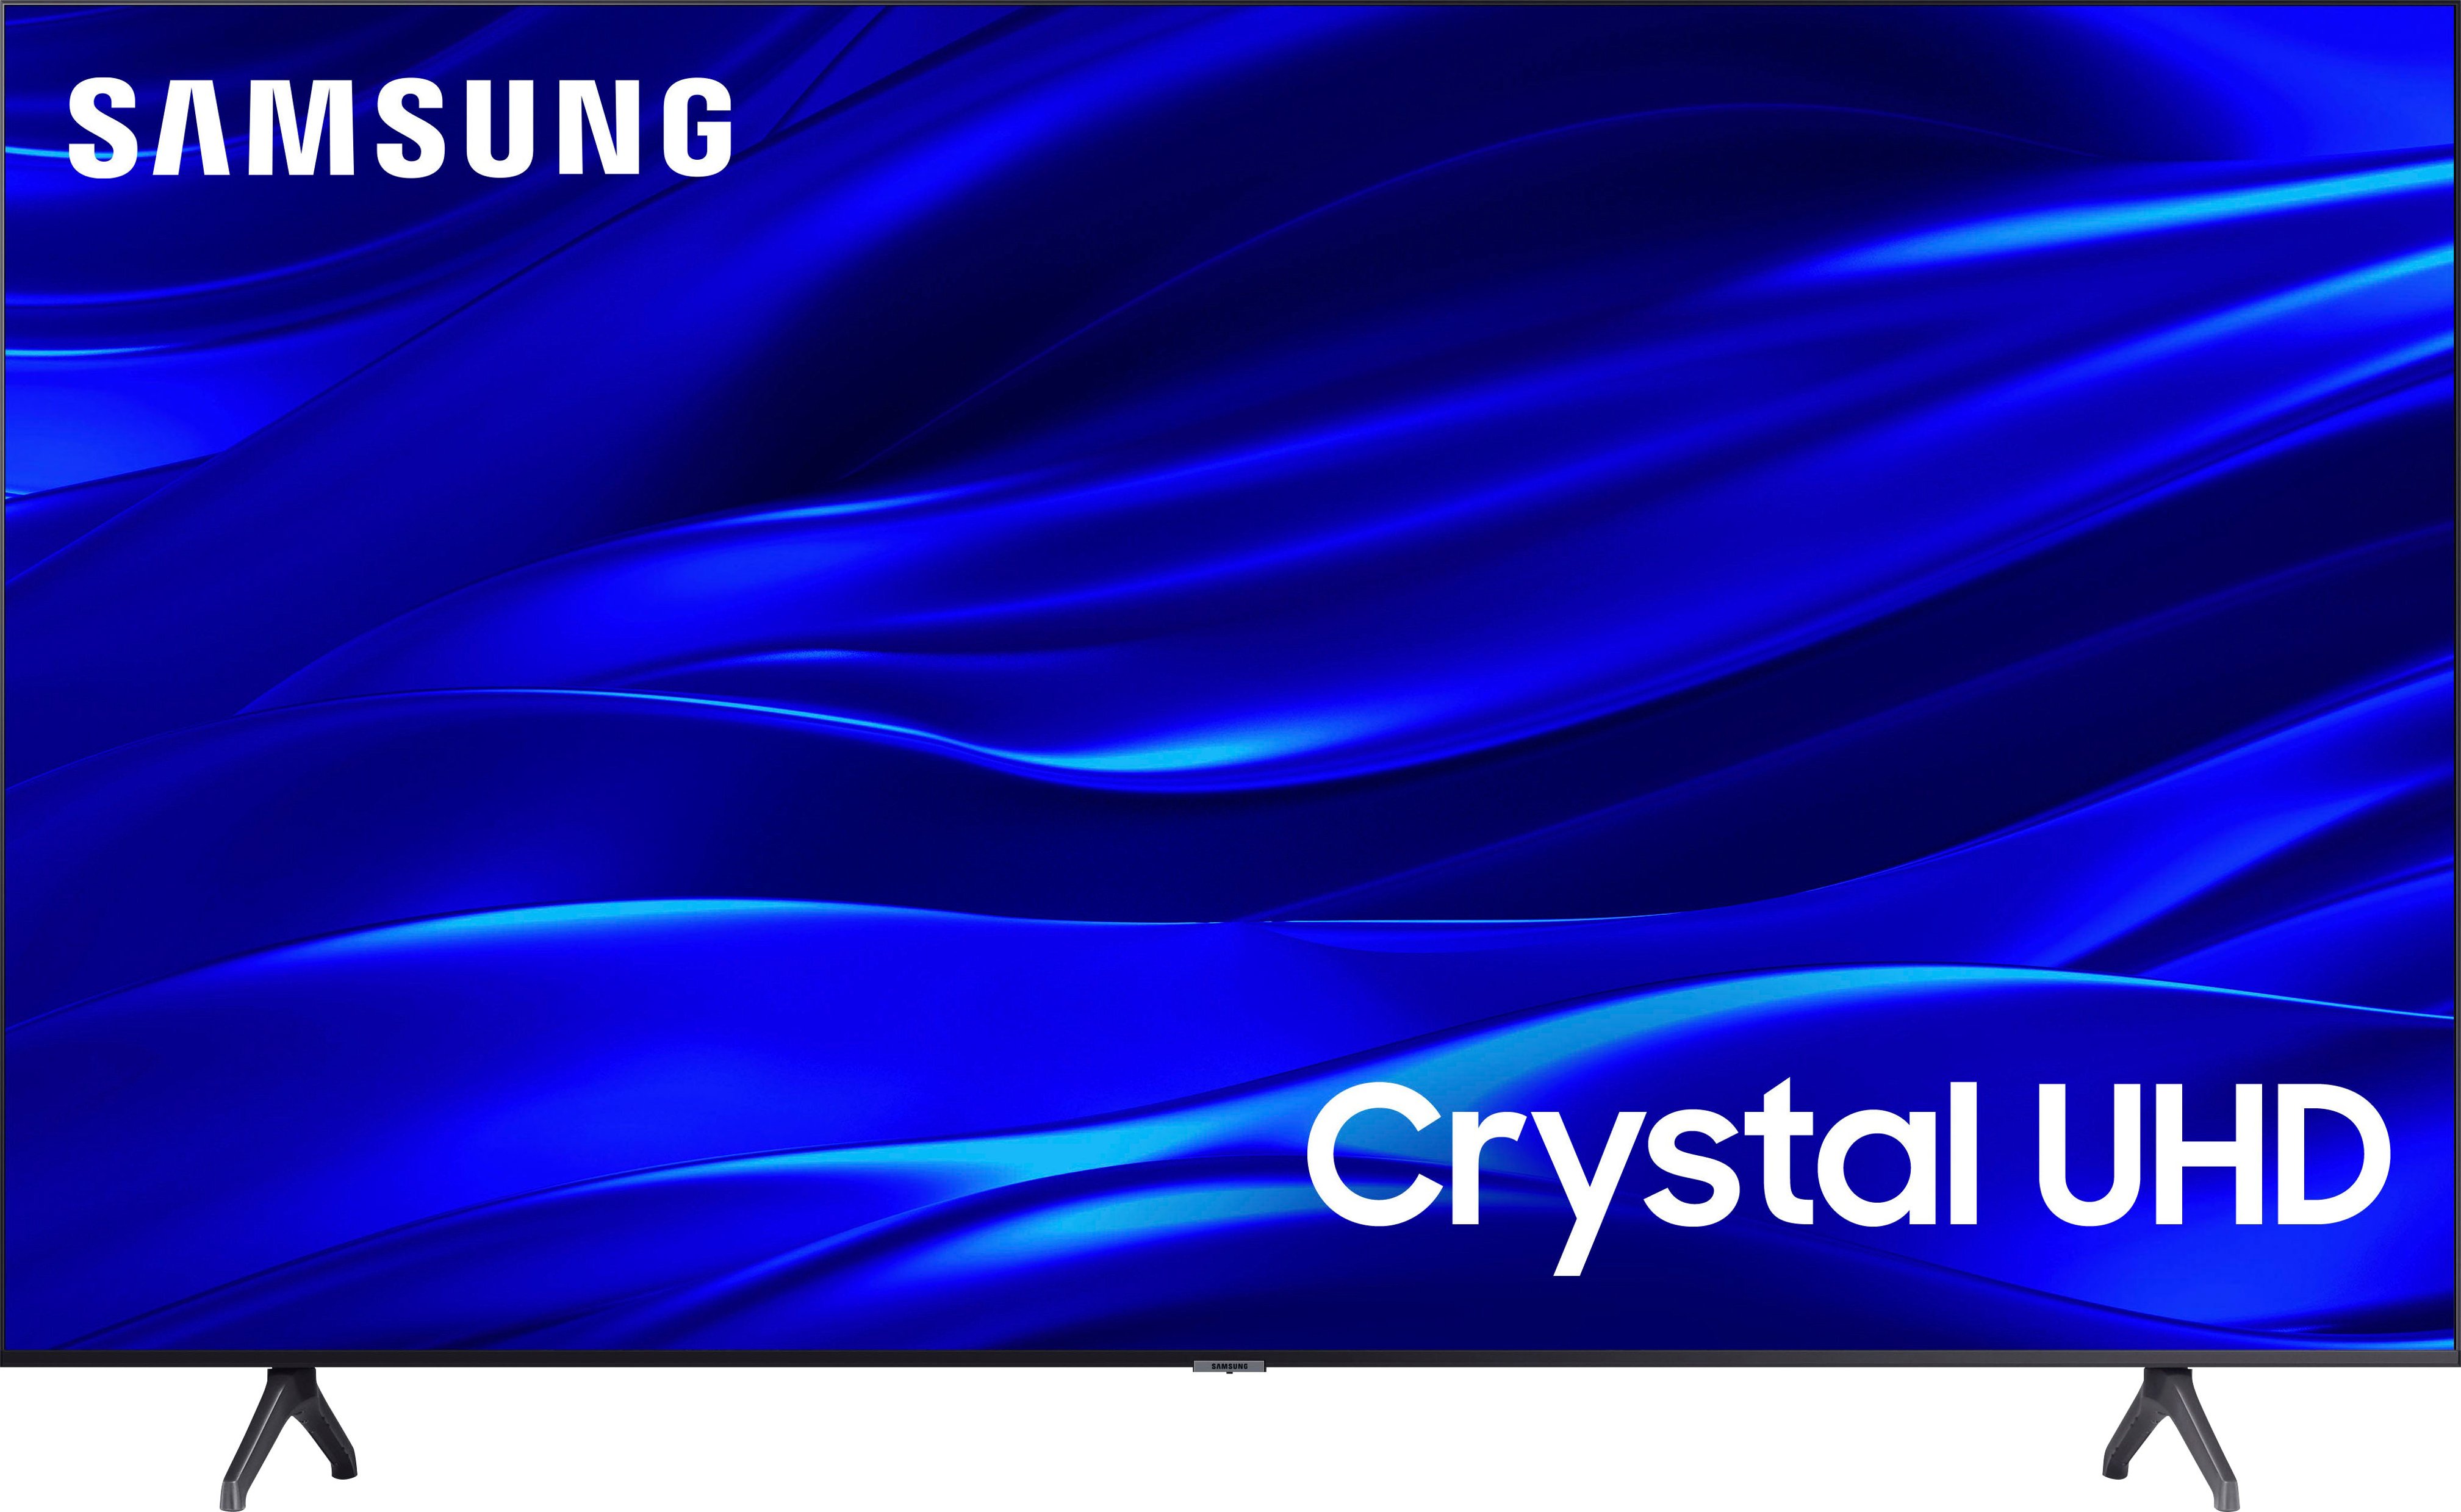 SAMSUNG 55 Class CU7000B Crystal UHD 4K Smart Television